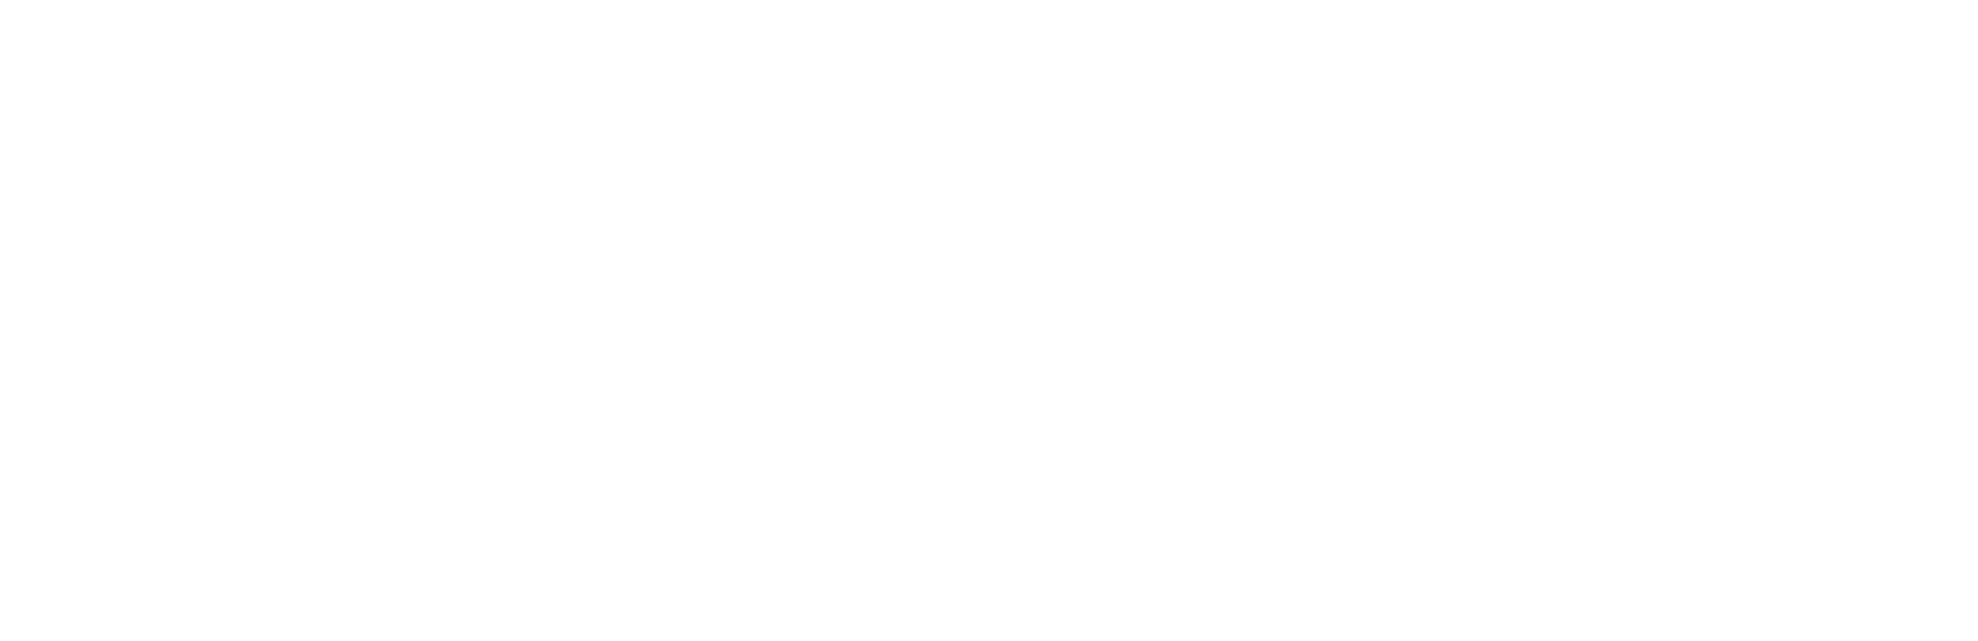 denim-pad-white-NEW.png